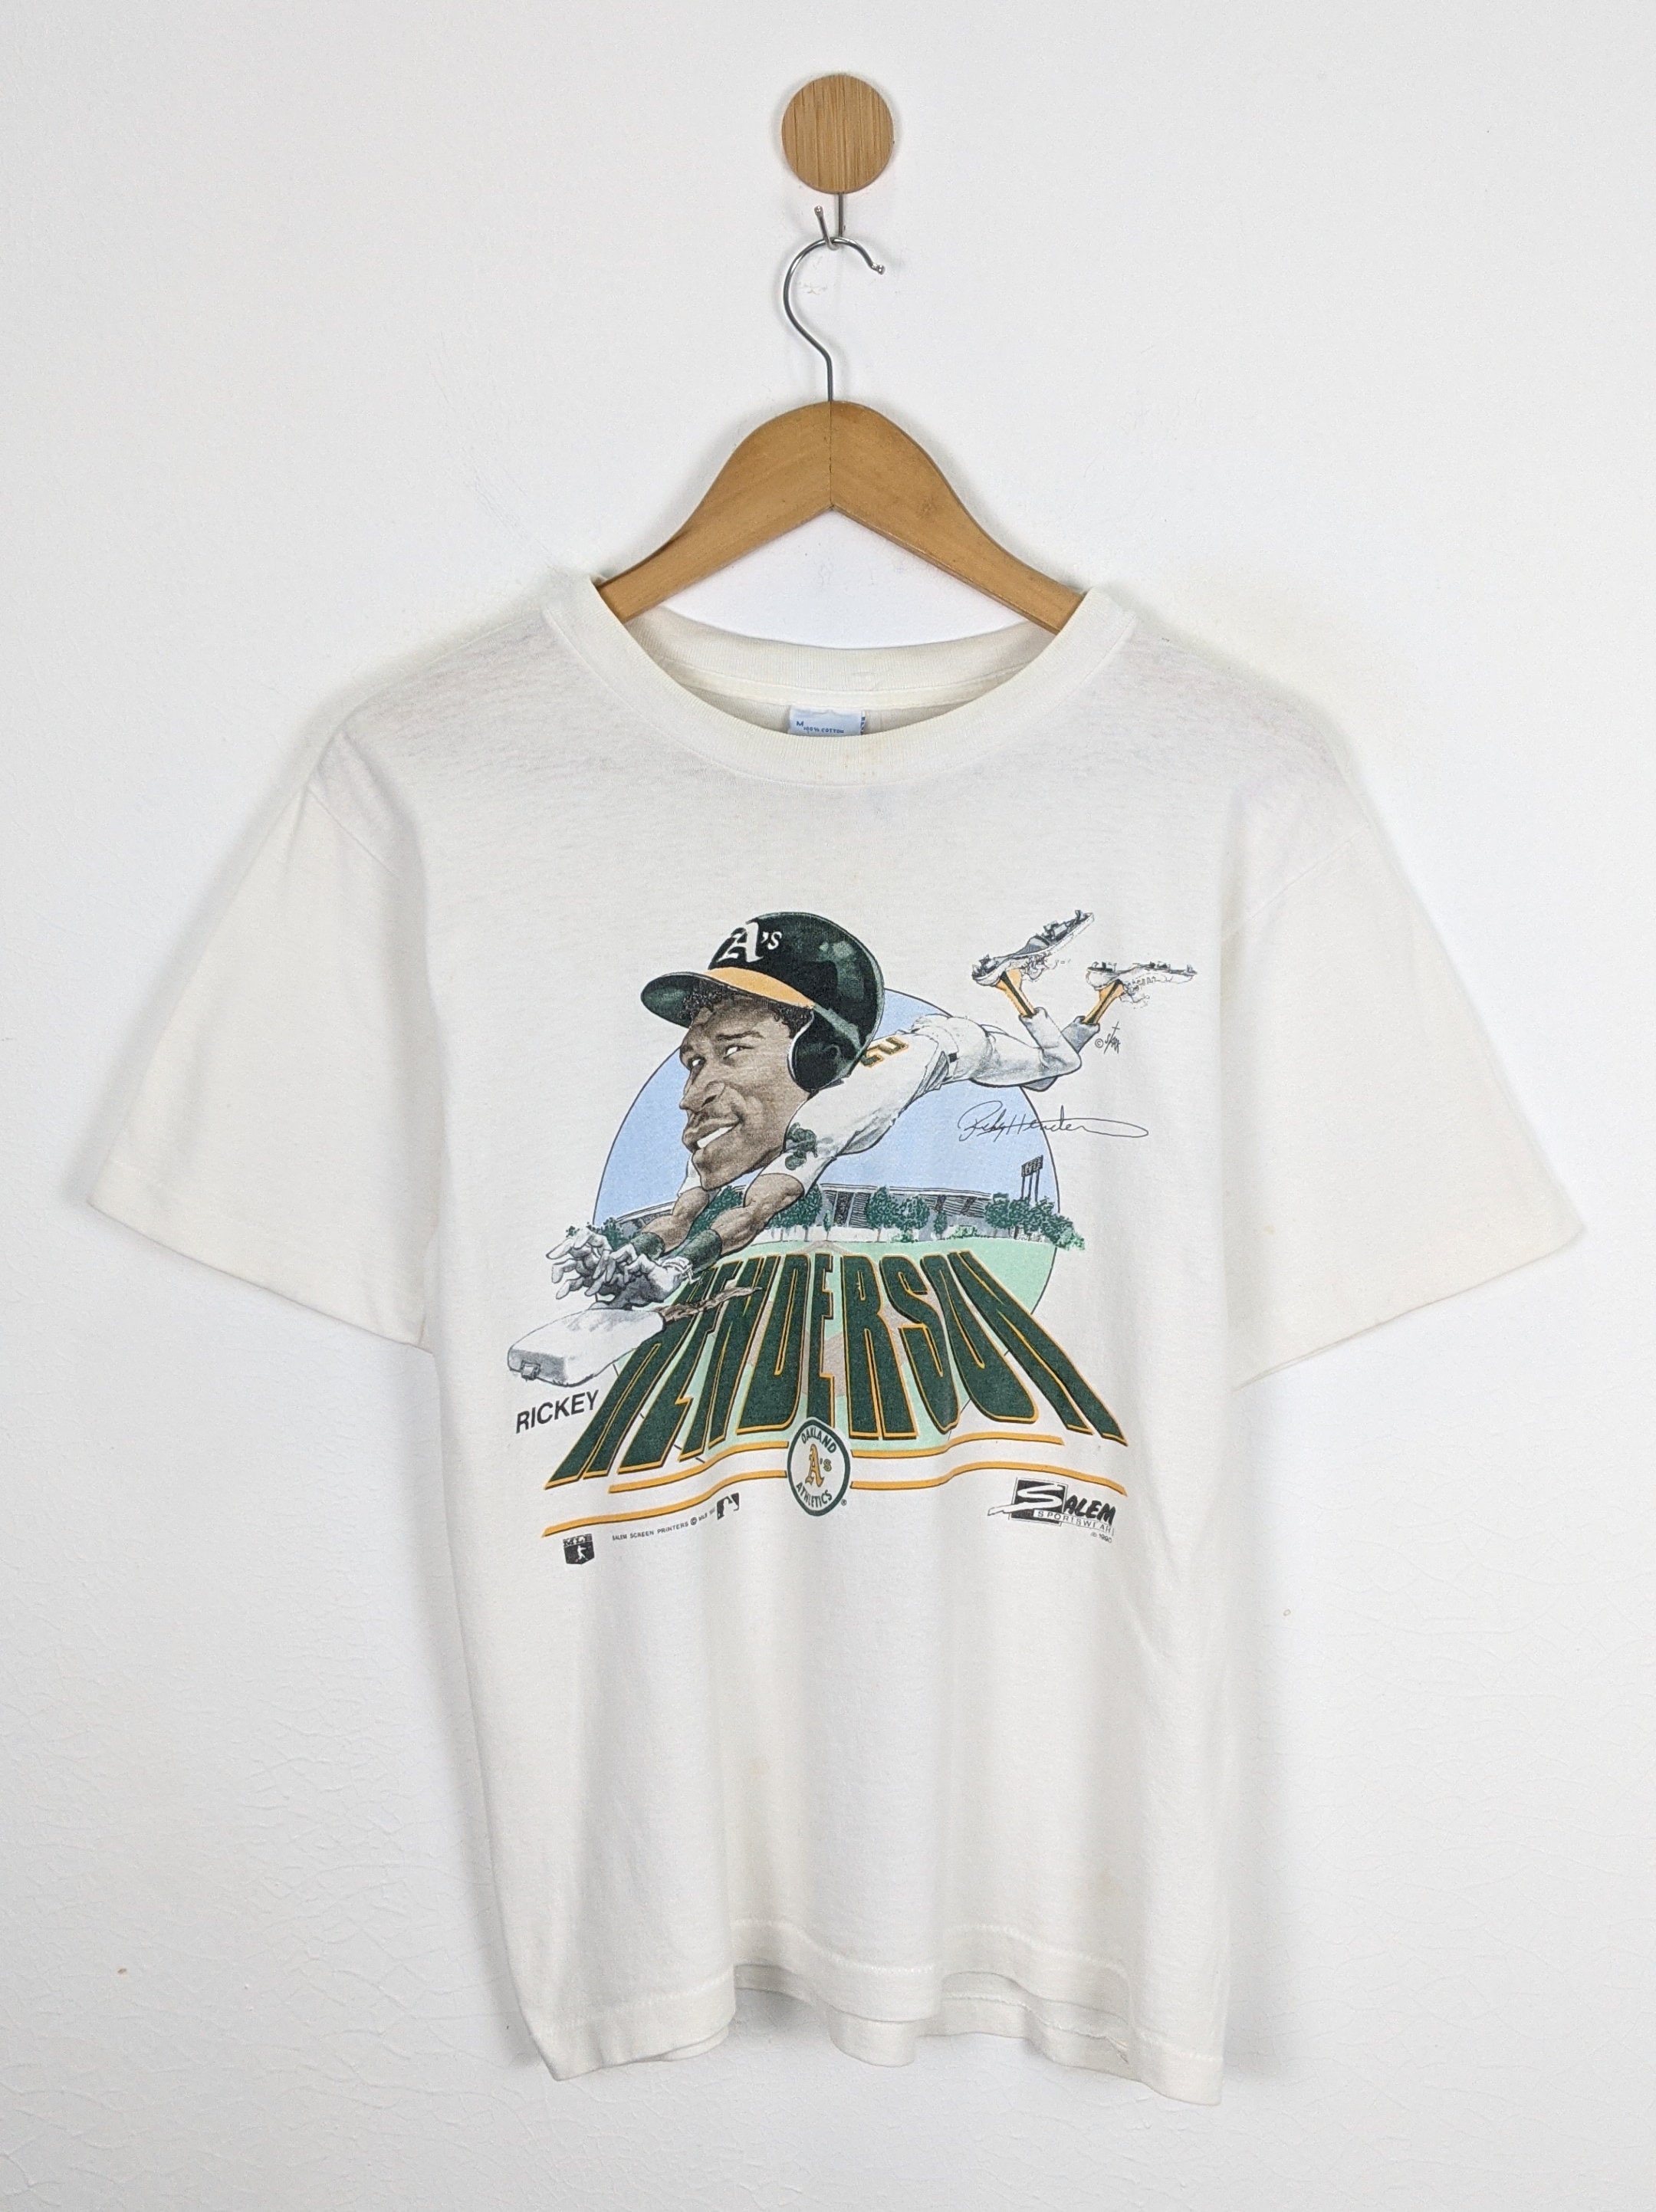 Vintage Rickey Henderson MLB 90s Oakland Athletic Shirt Size M 